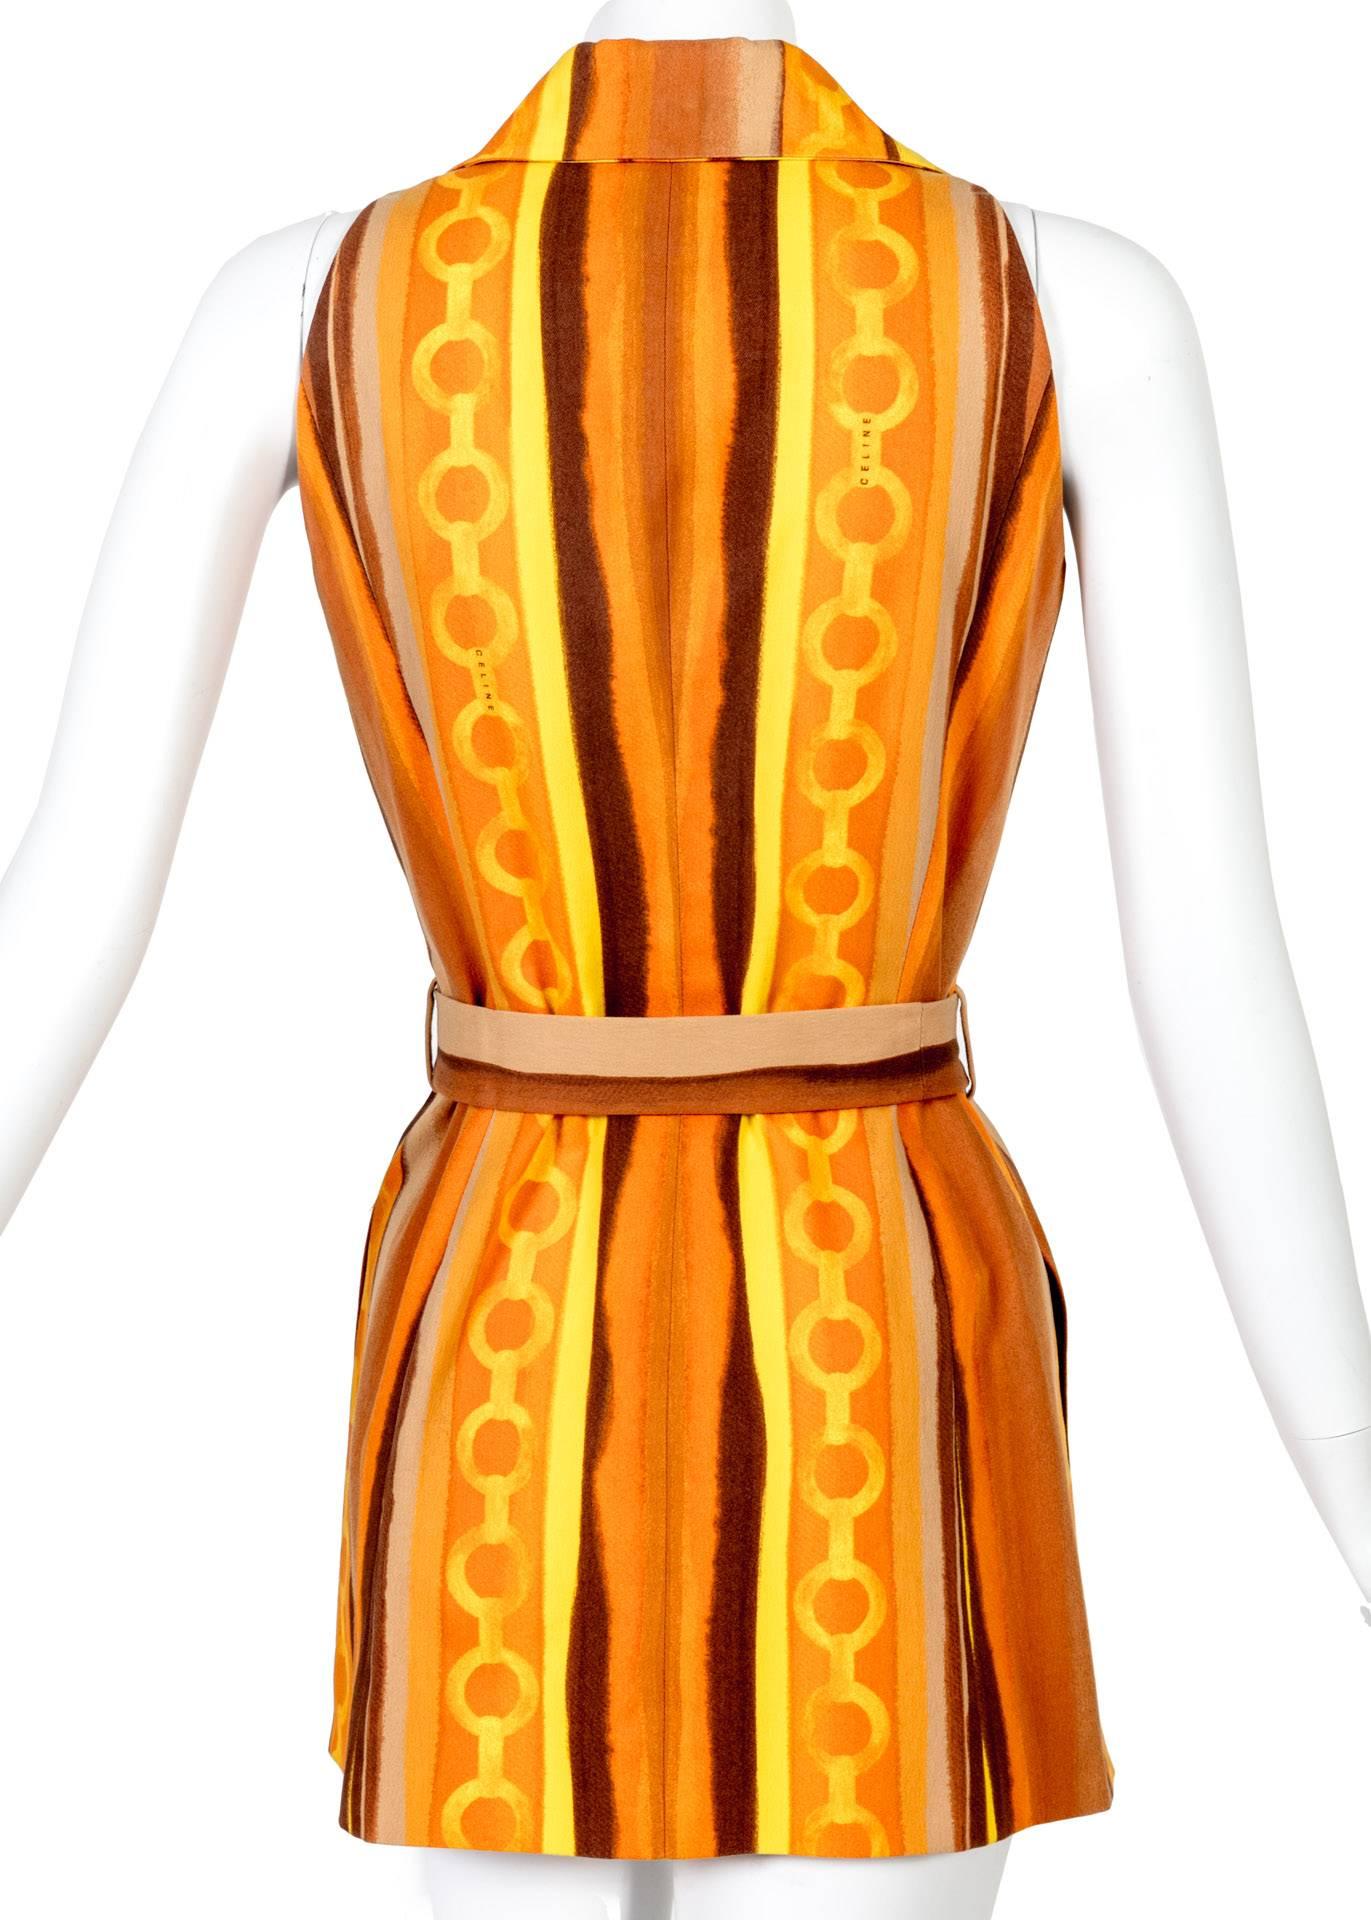 Celine Vintage Mod Stripe Print Belted Tunic Vest In Excellent Condition For Sale In Boca Raton, FL